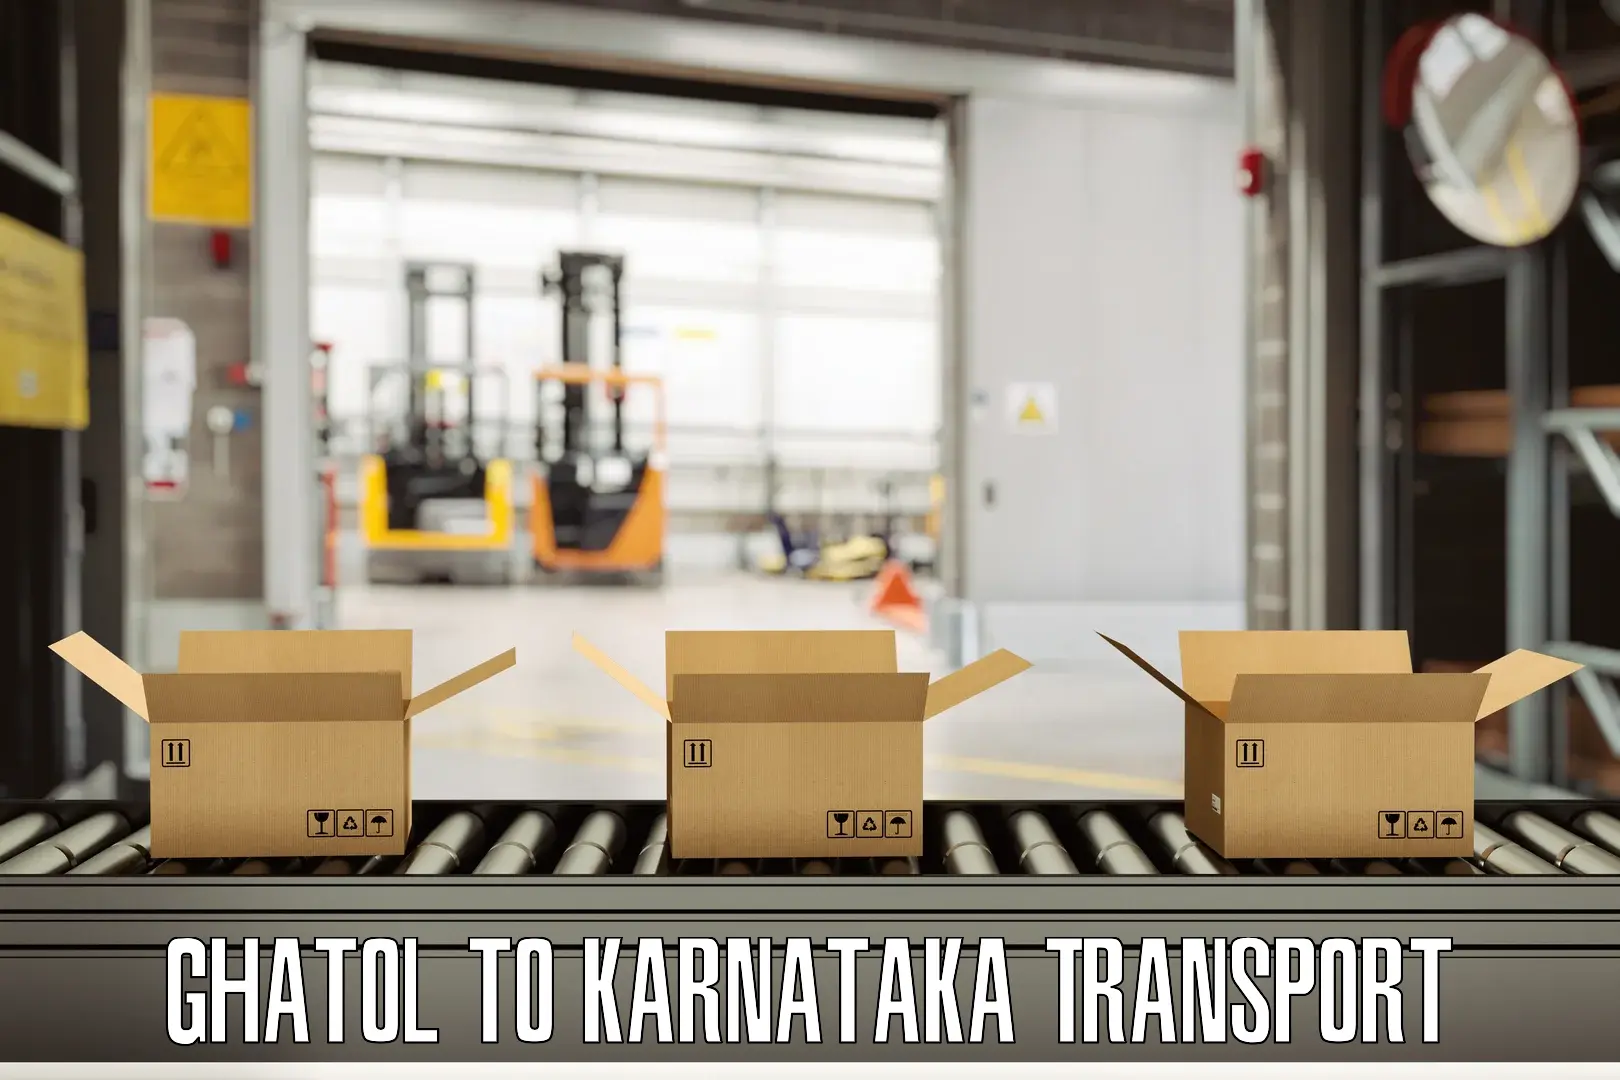 Daily transport service Ghatol to Karnataka